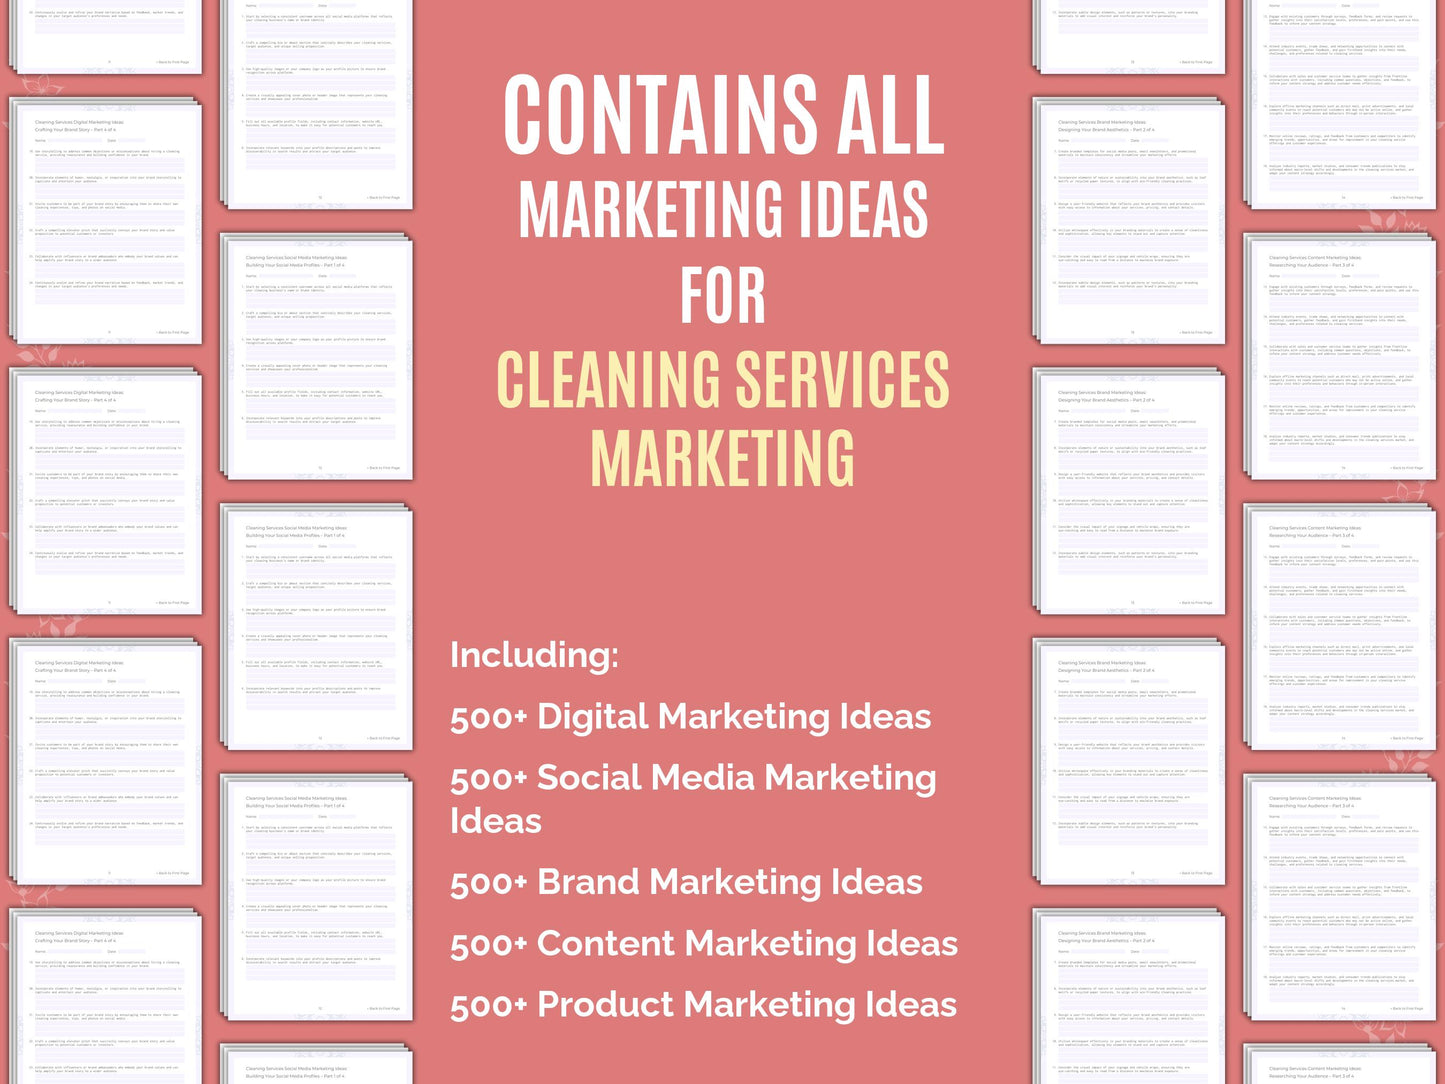 Product Marketing Ideas Resource